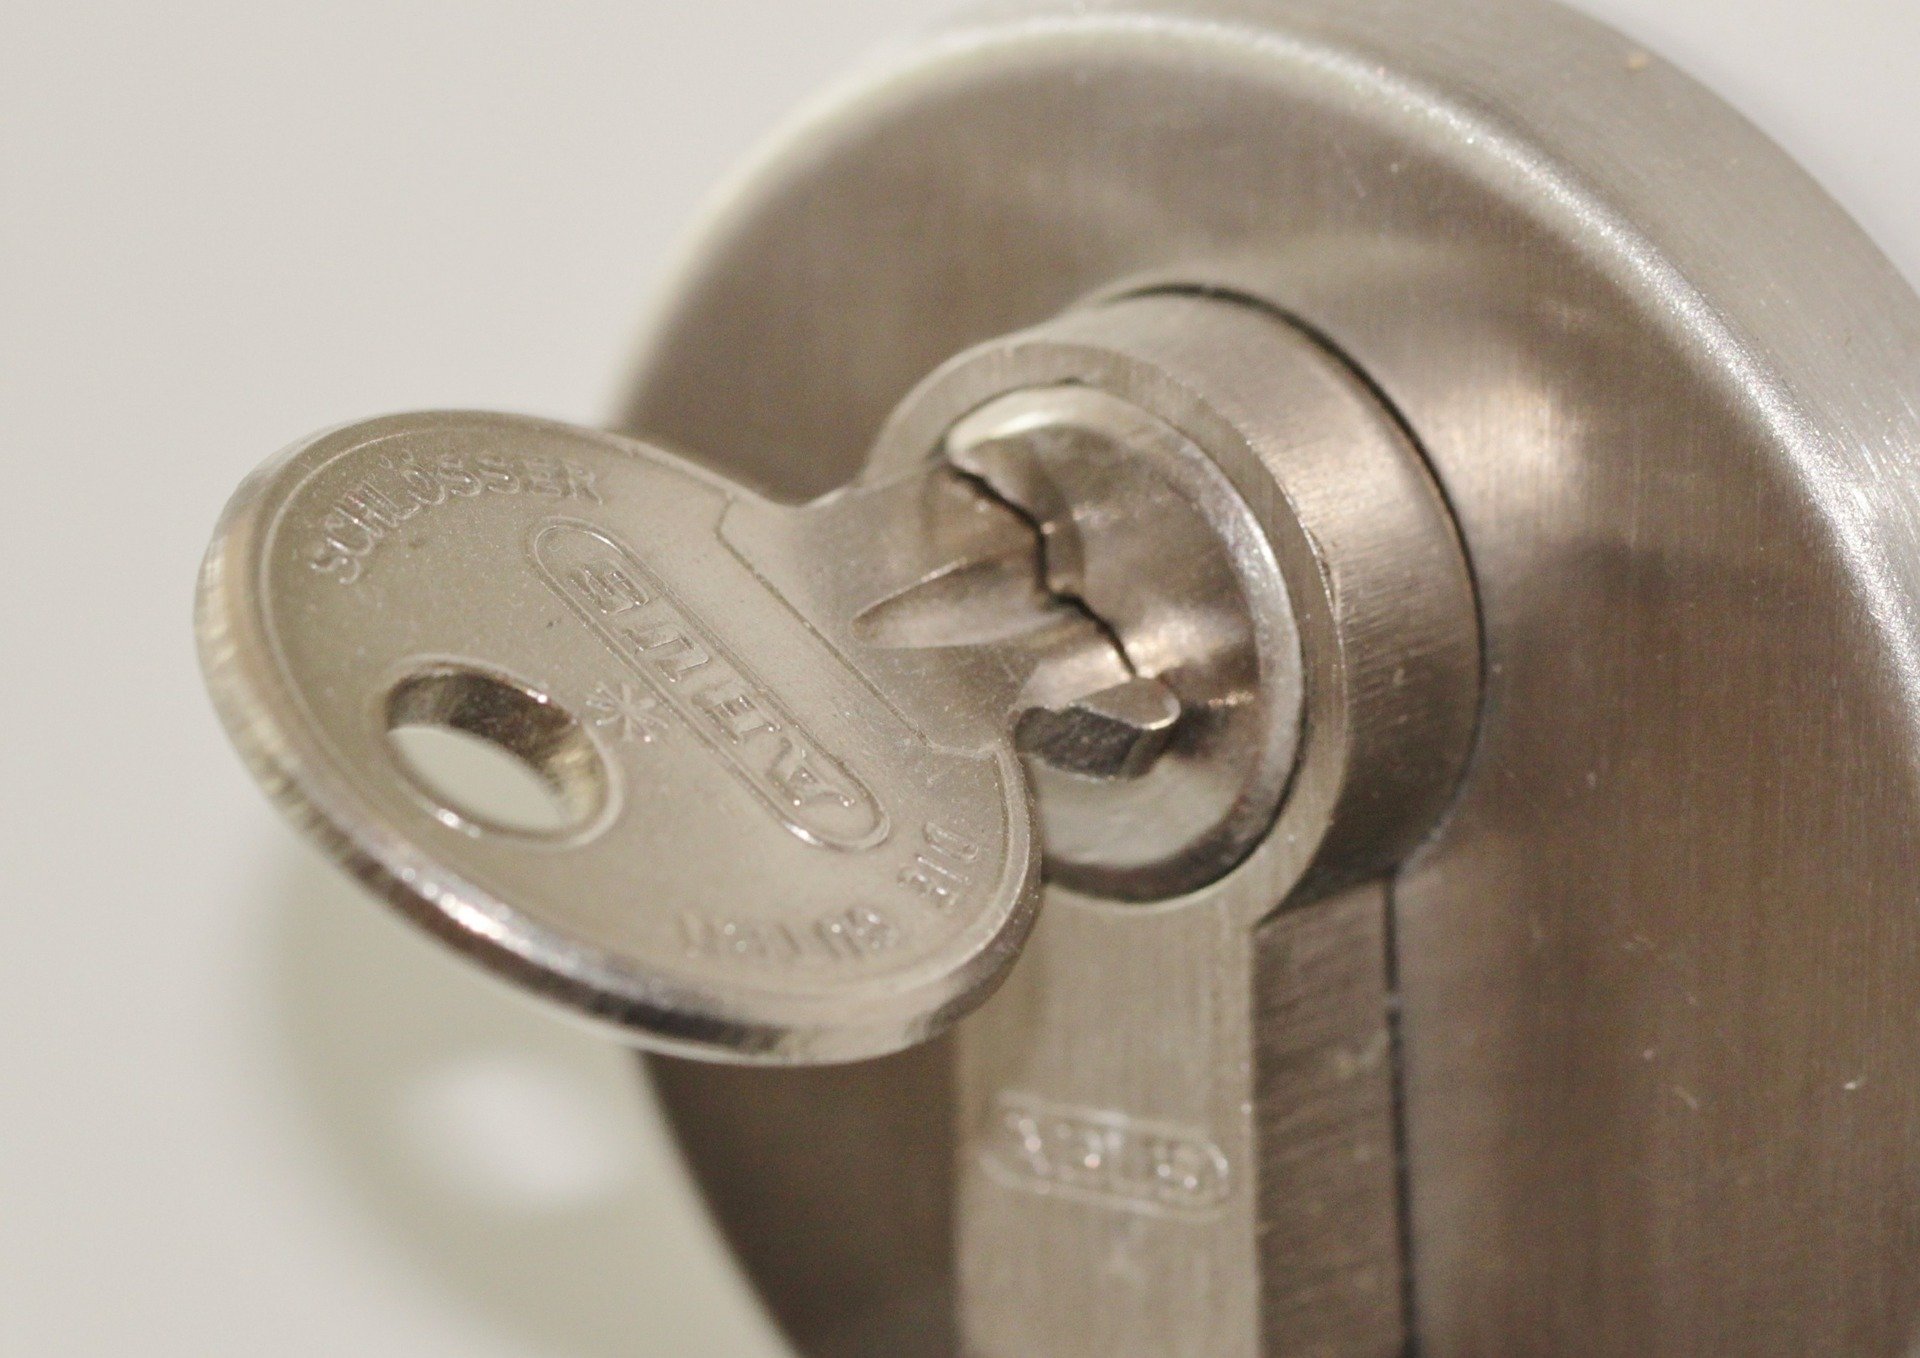 Door lock with a key input | Source: Pixabay